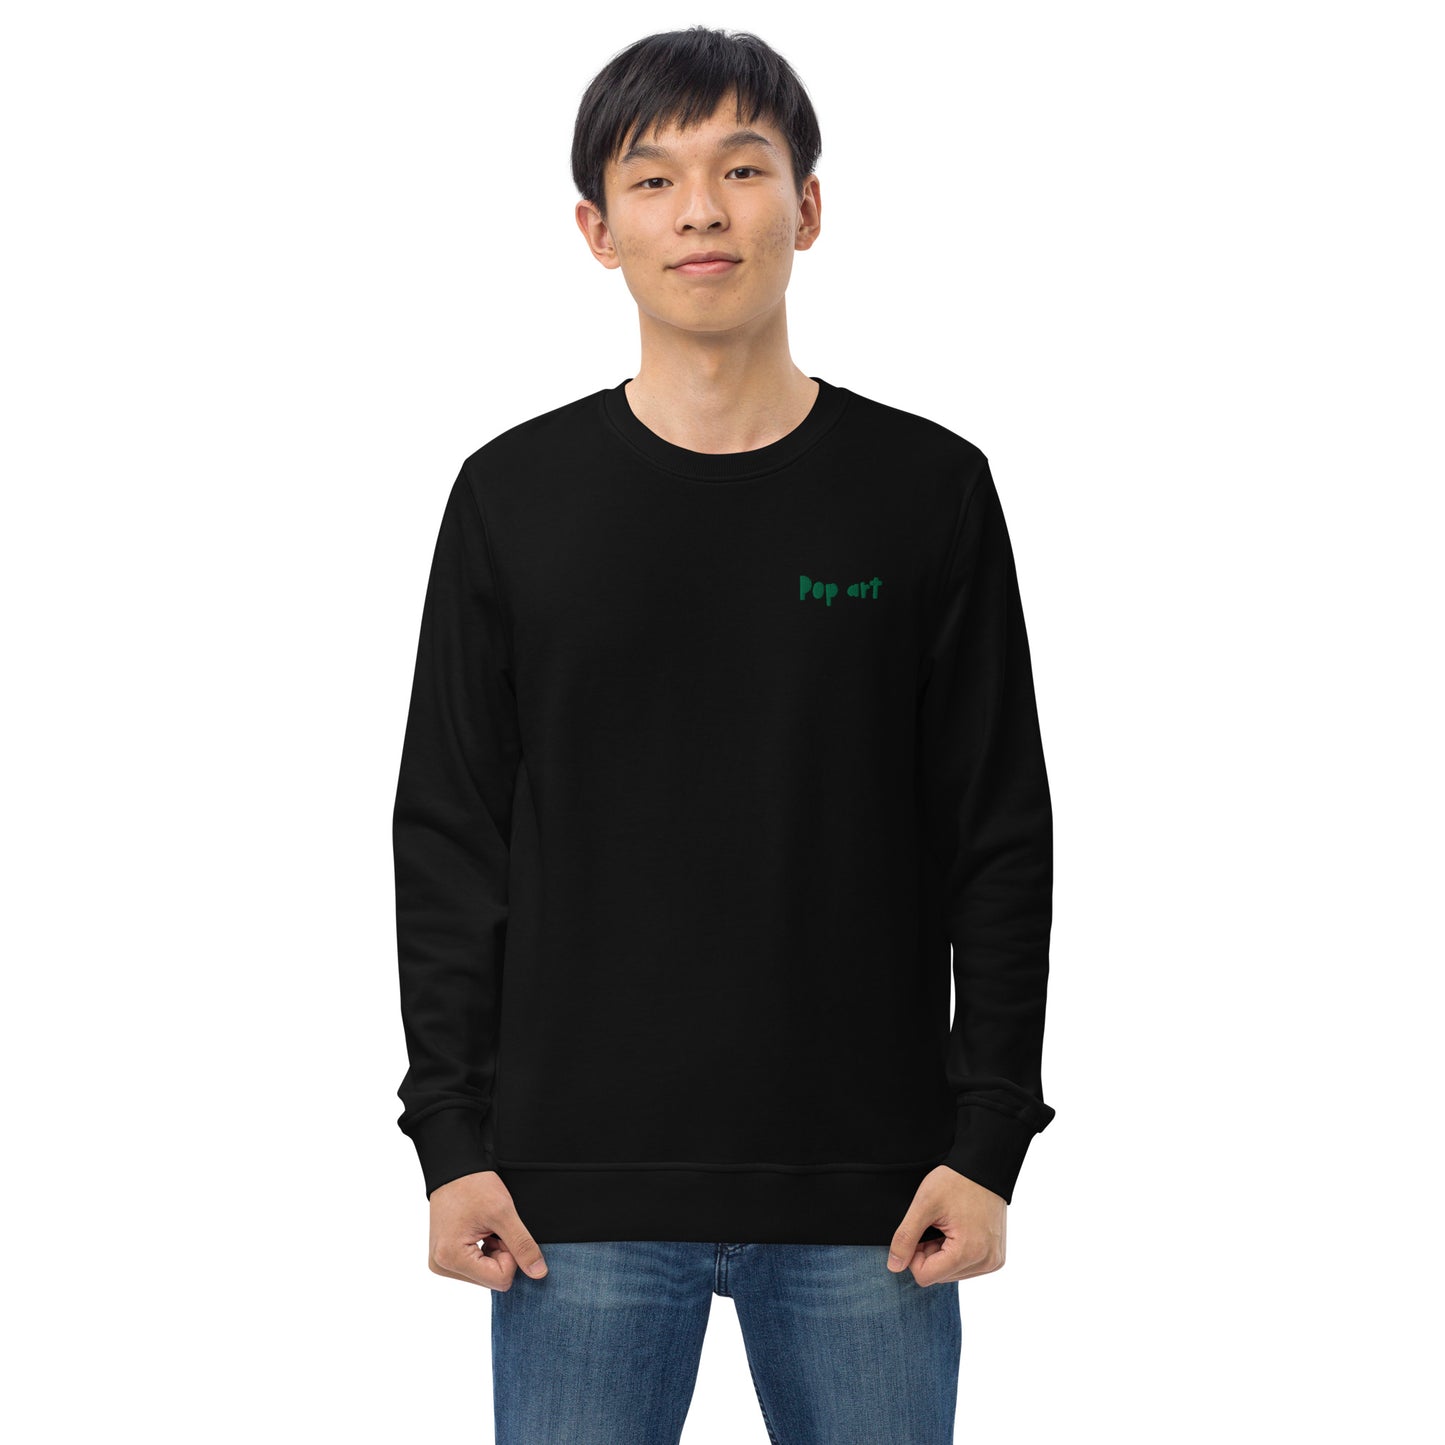 Unisex organic sweatshirt with pop art design